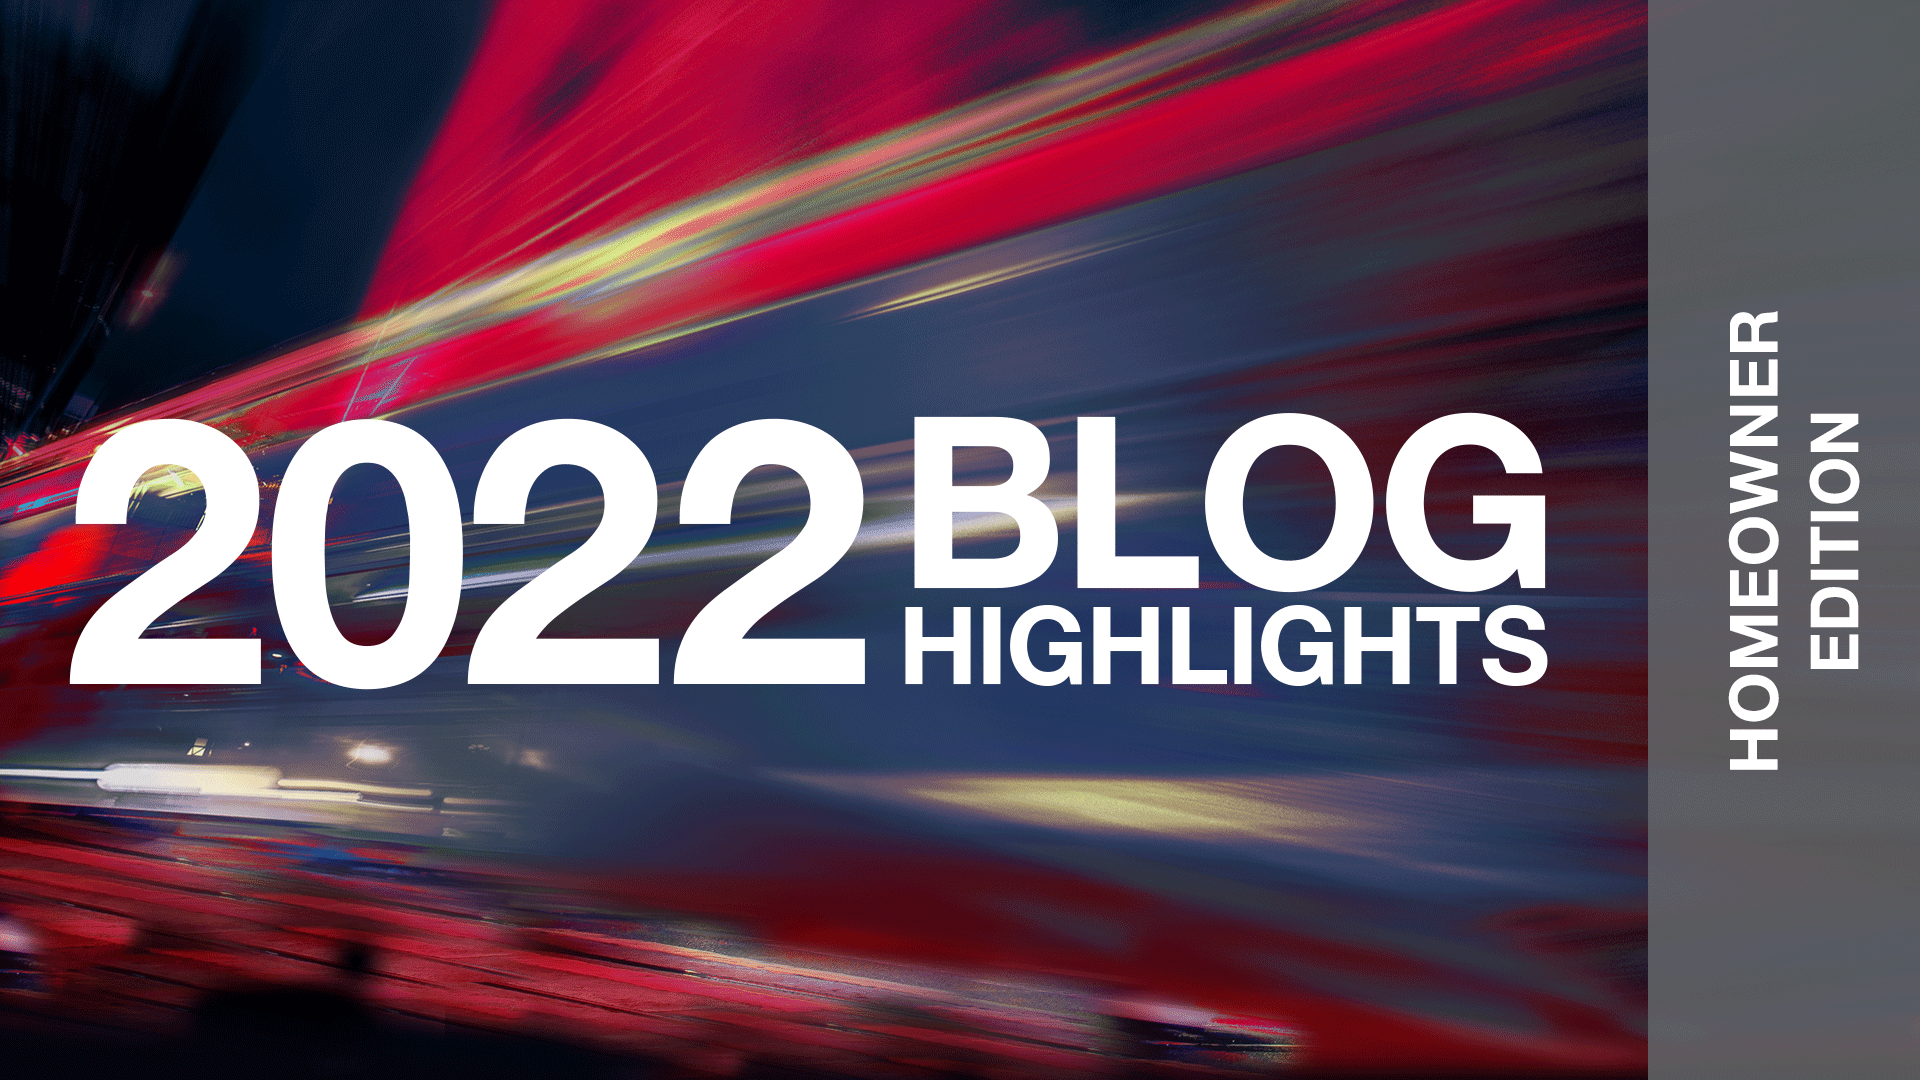 2022 blog highlights homeowner edition